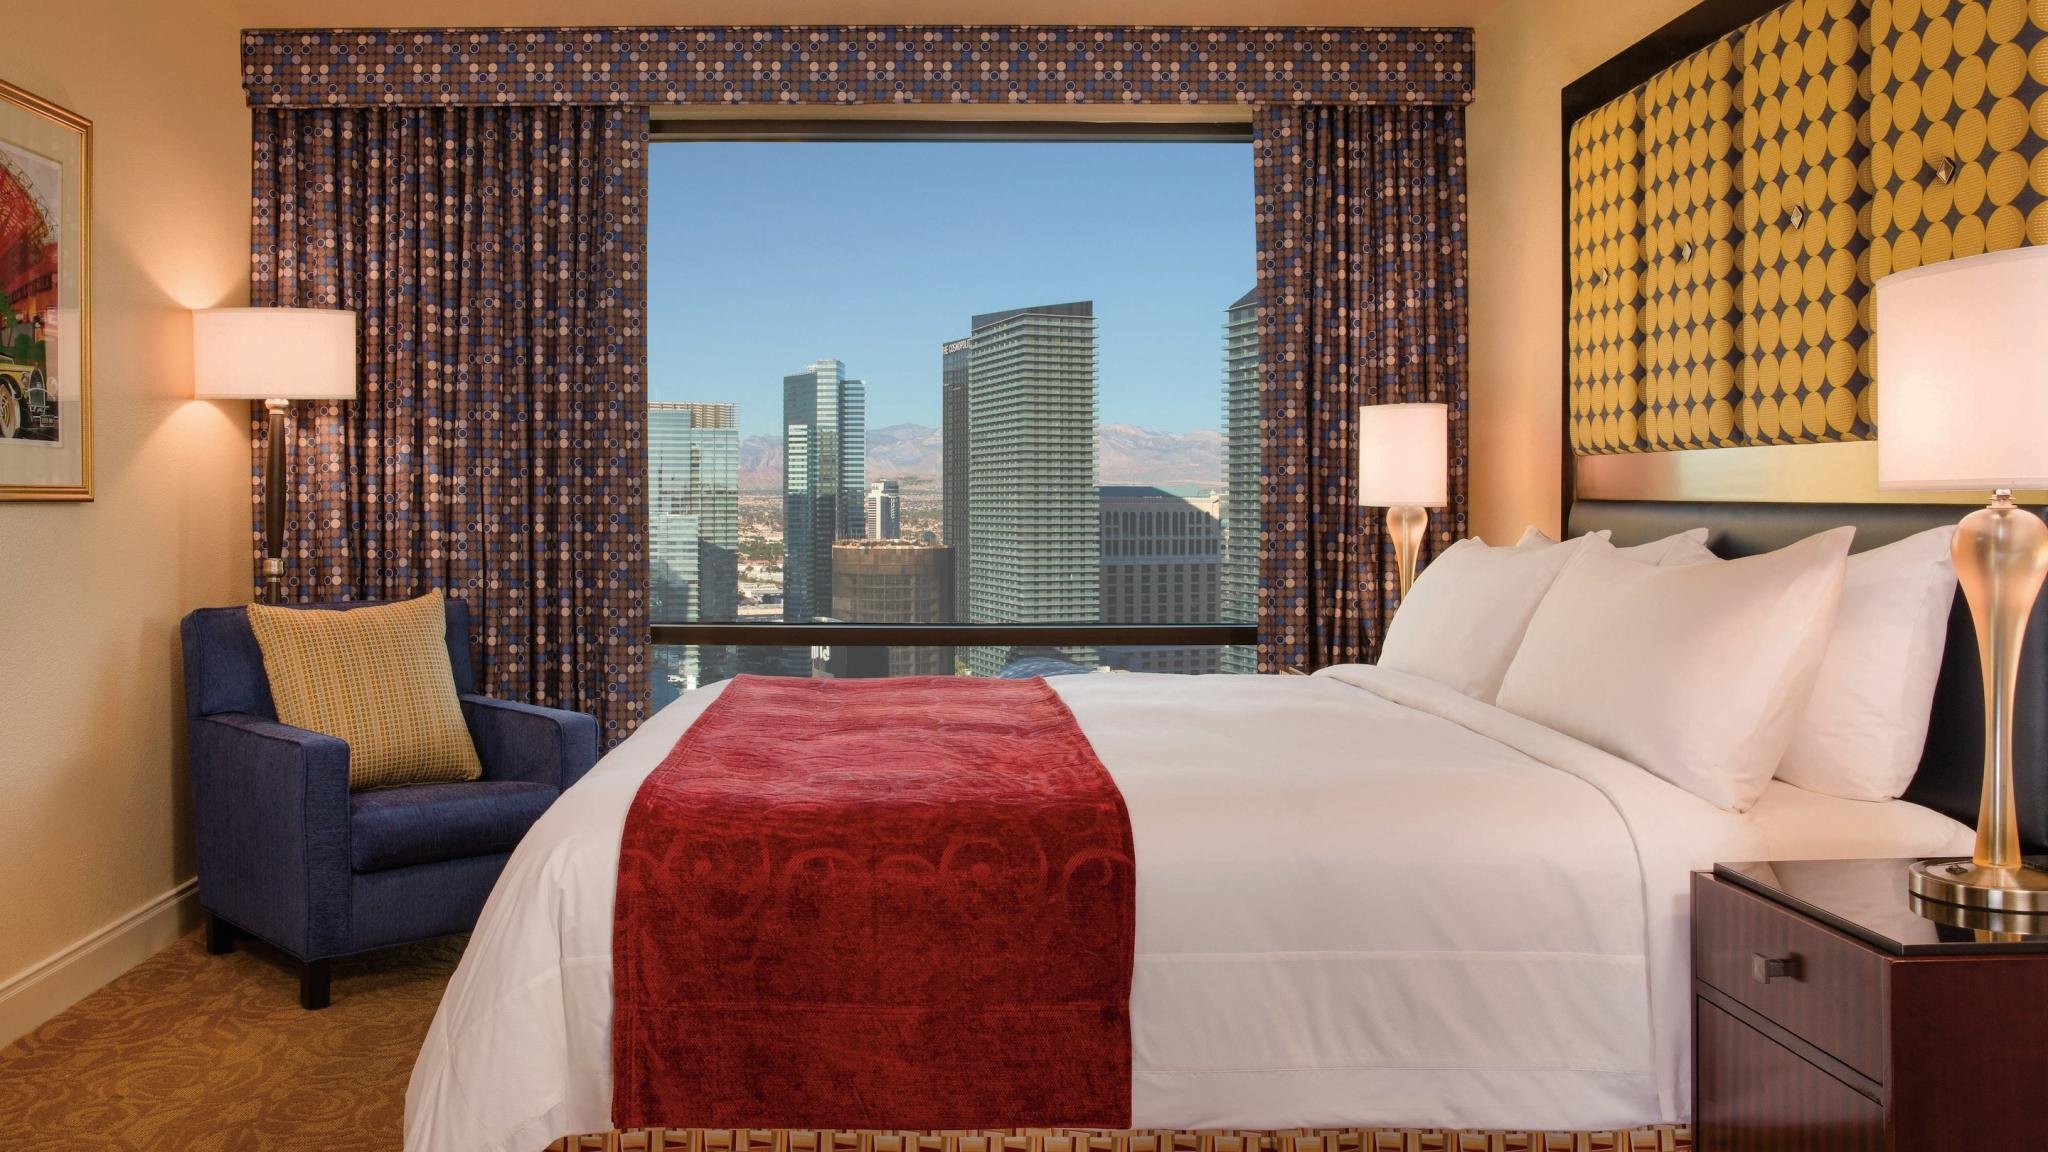 Marriott's Grand Chateau- First Class Las Vegas, NV Hotels- GDS